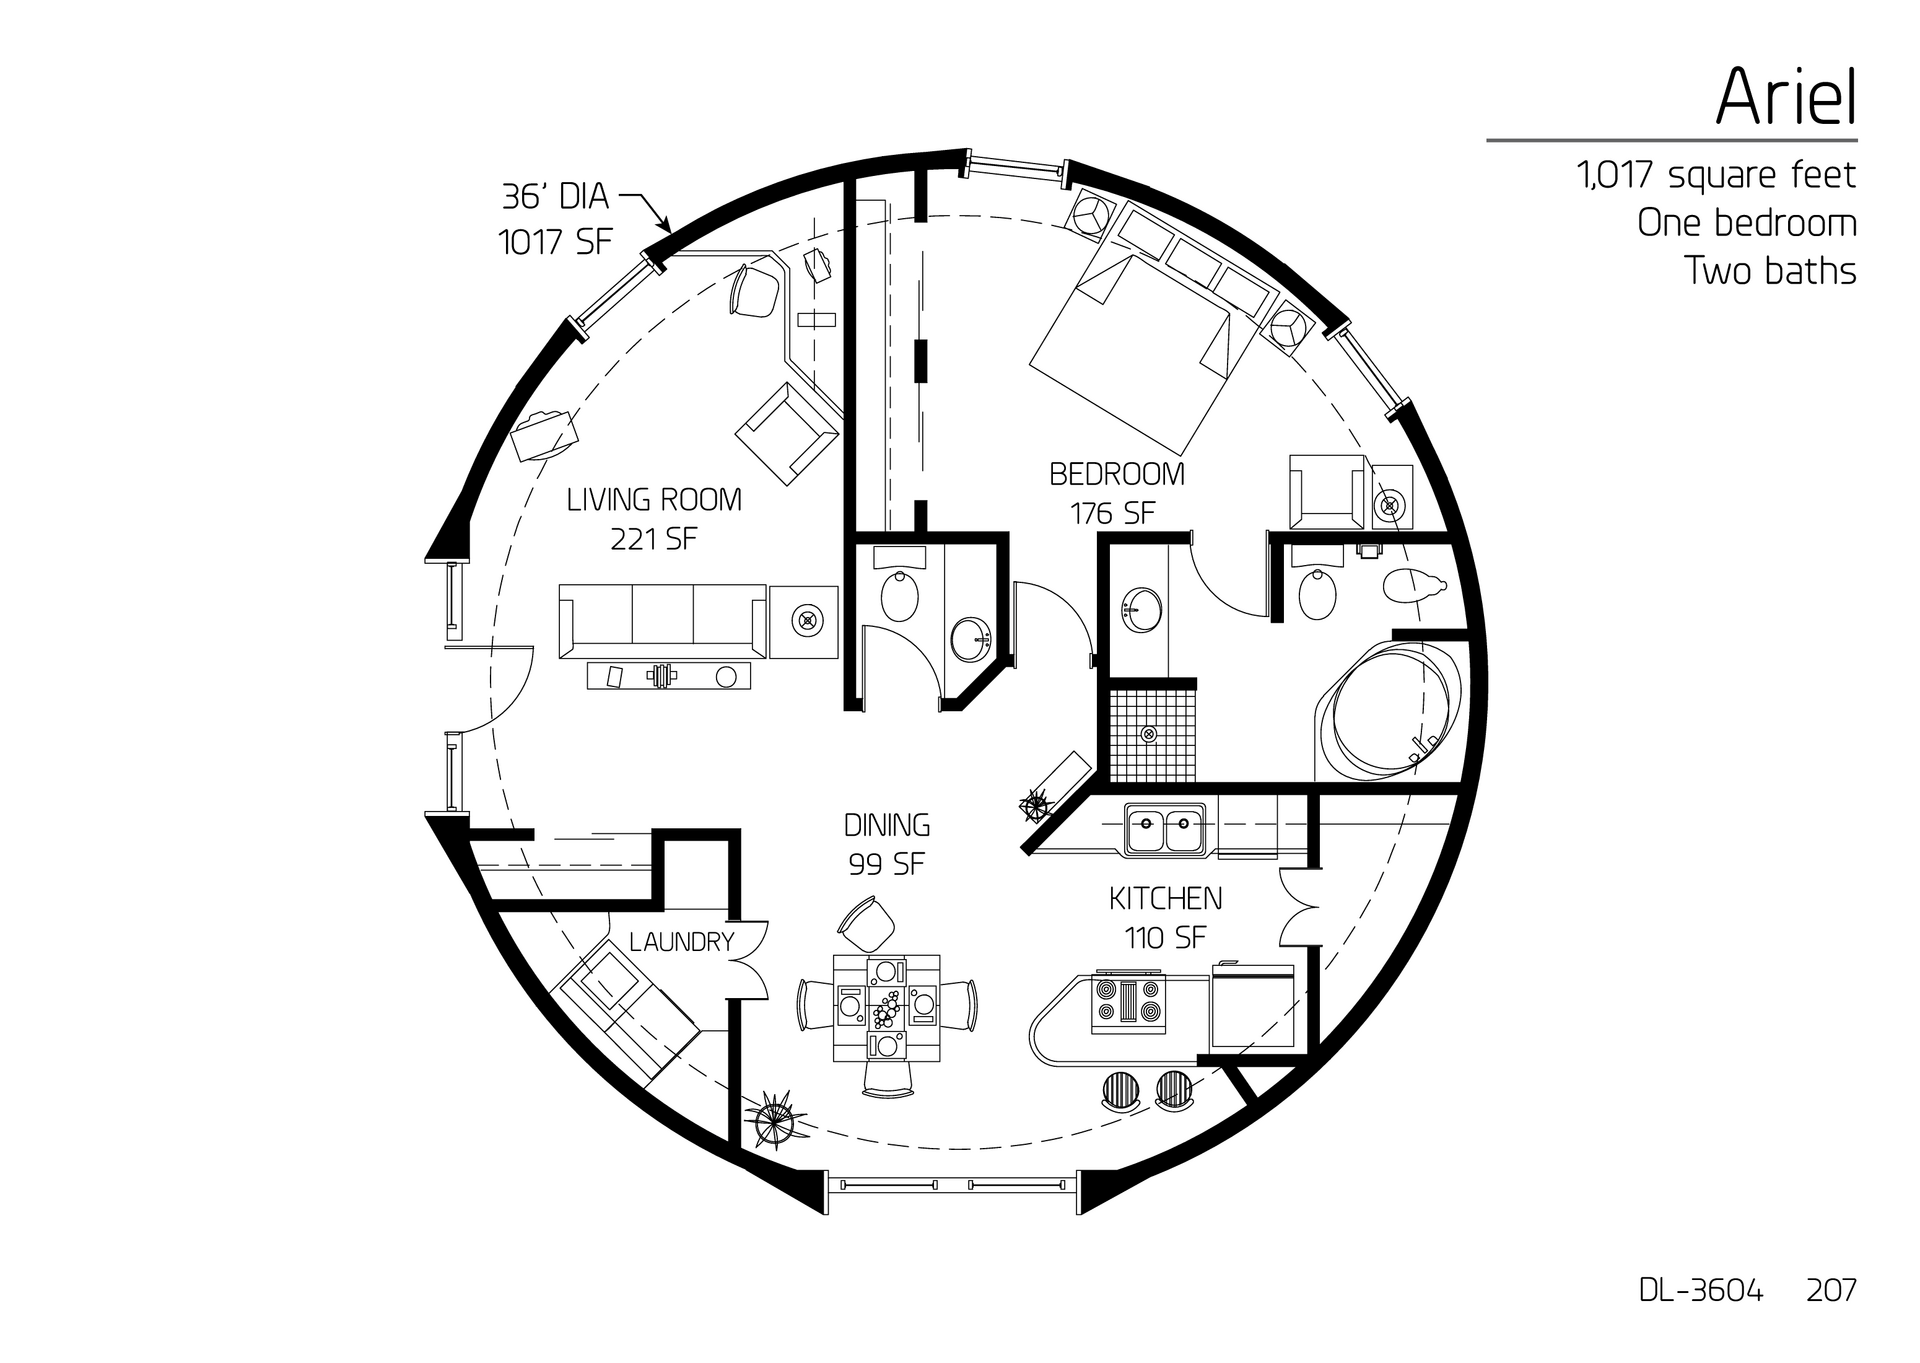 Ariel: A 36' diameter, 1,017 SF, One-bedroom, One and a Half-Bath Floor Plan.